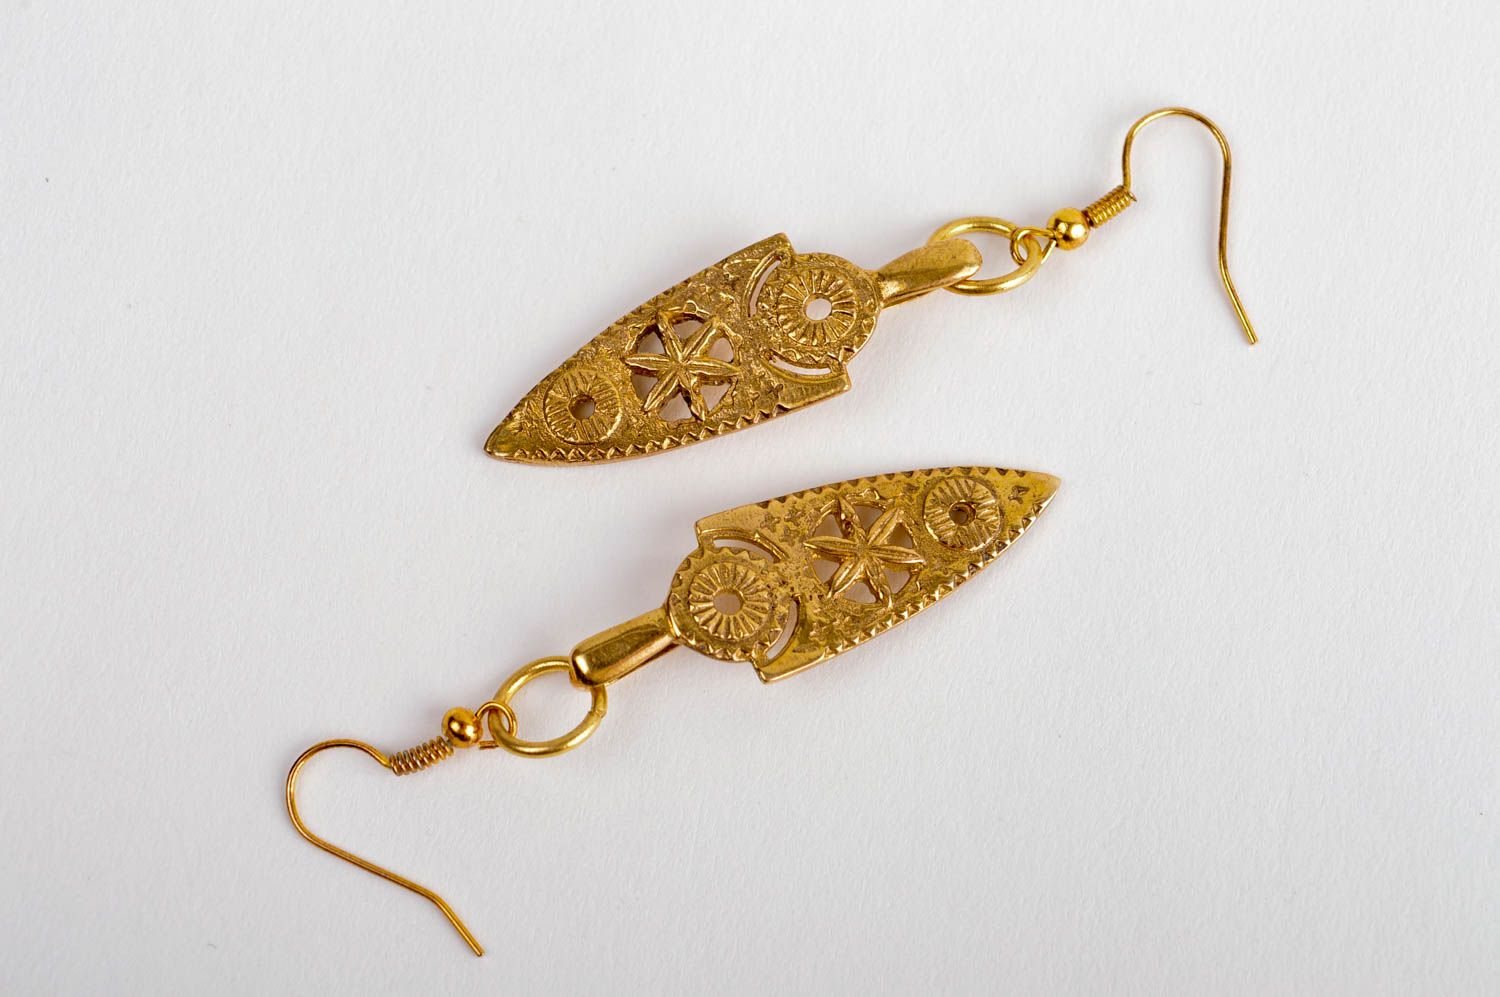 Unusual handmade metal earrings cool jewelry designs metal craft gifts for her photo 5